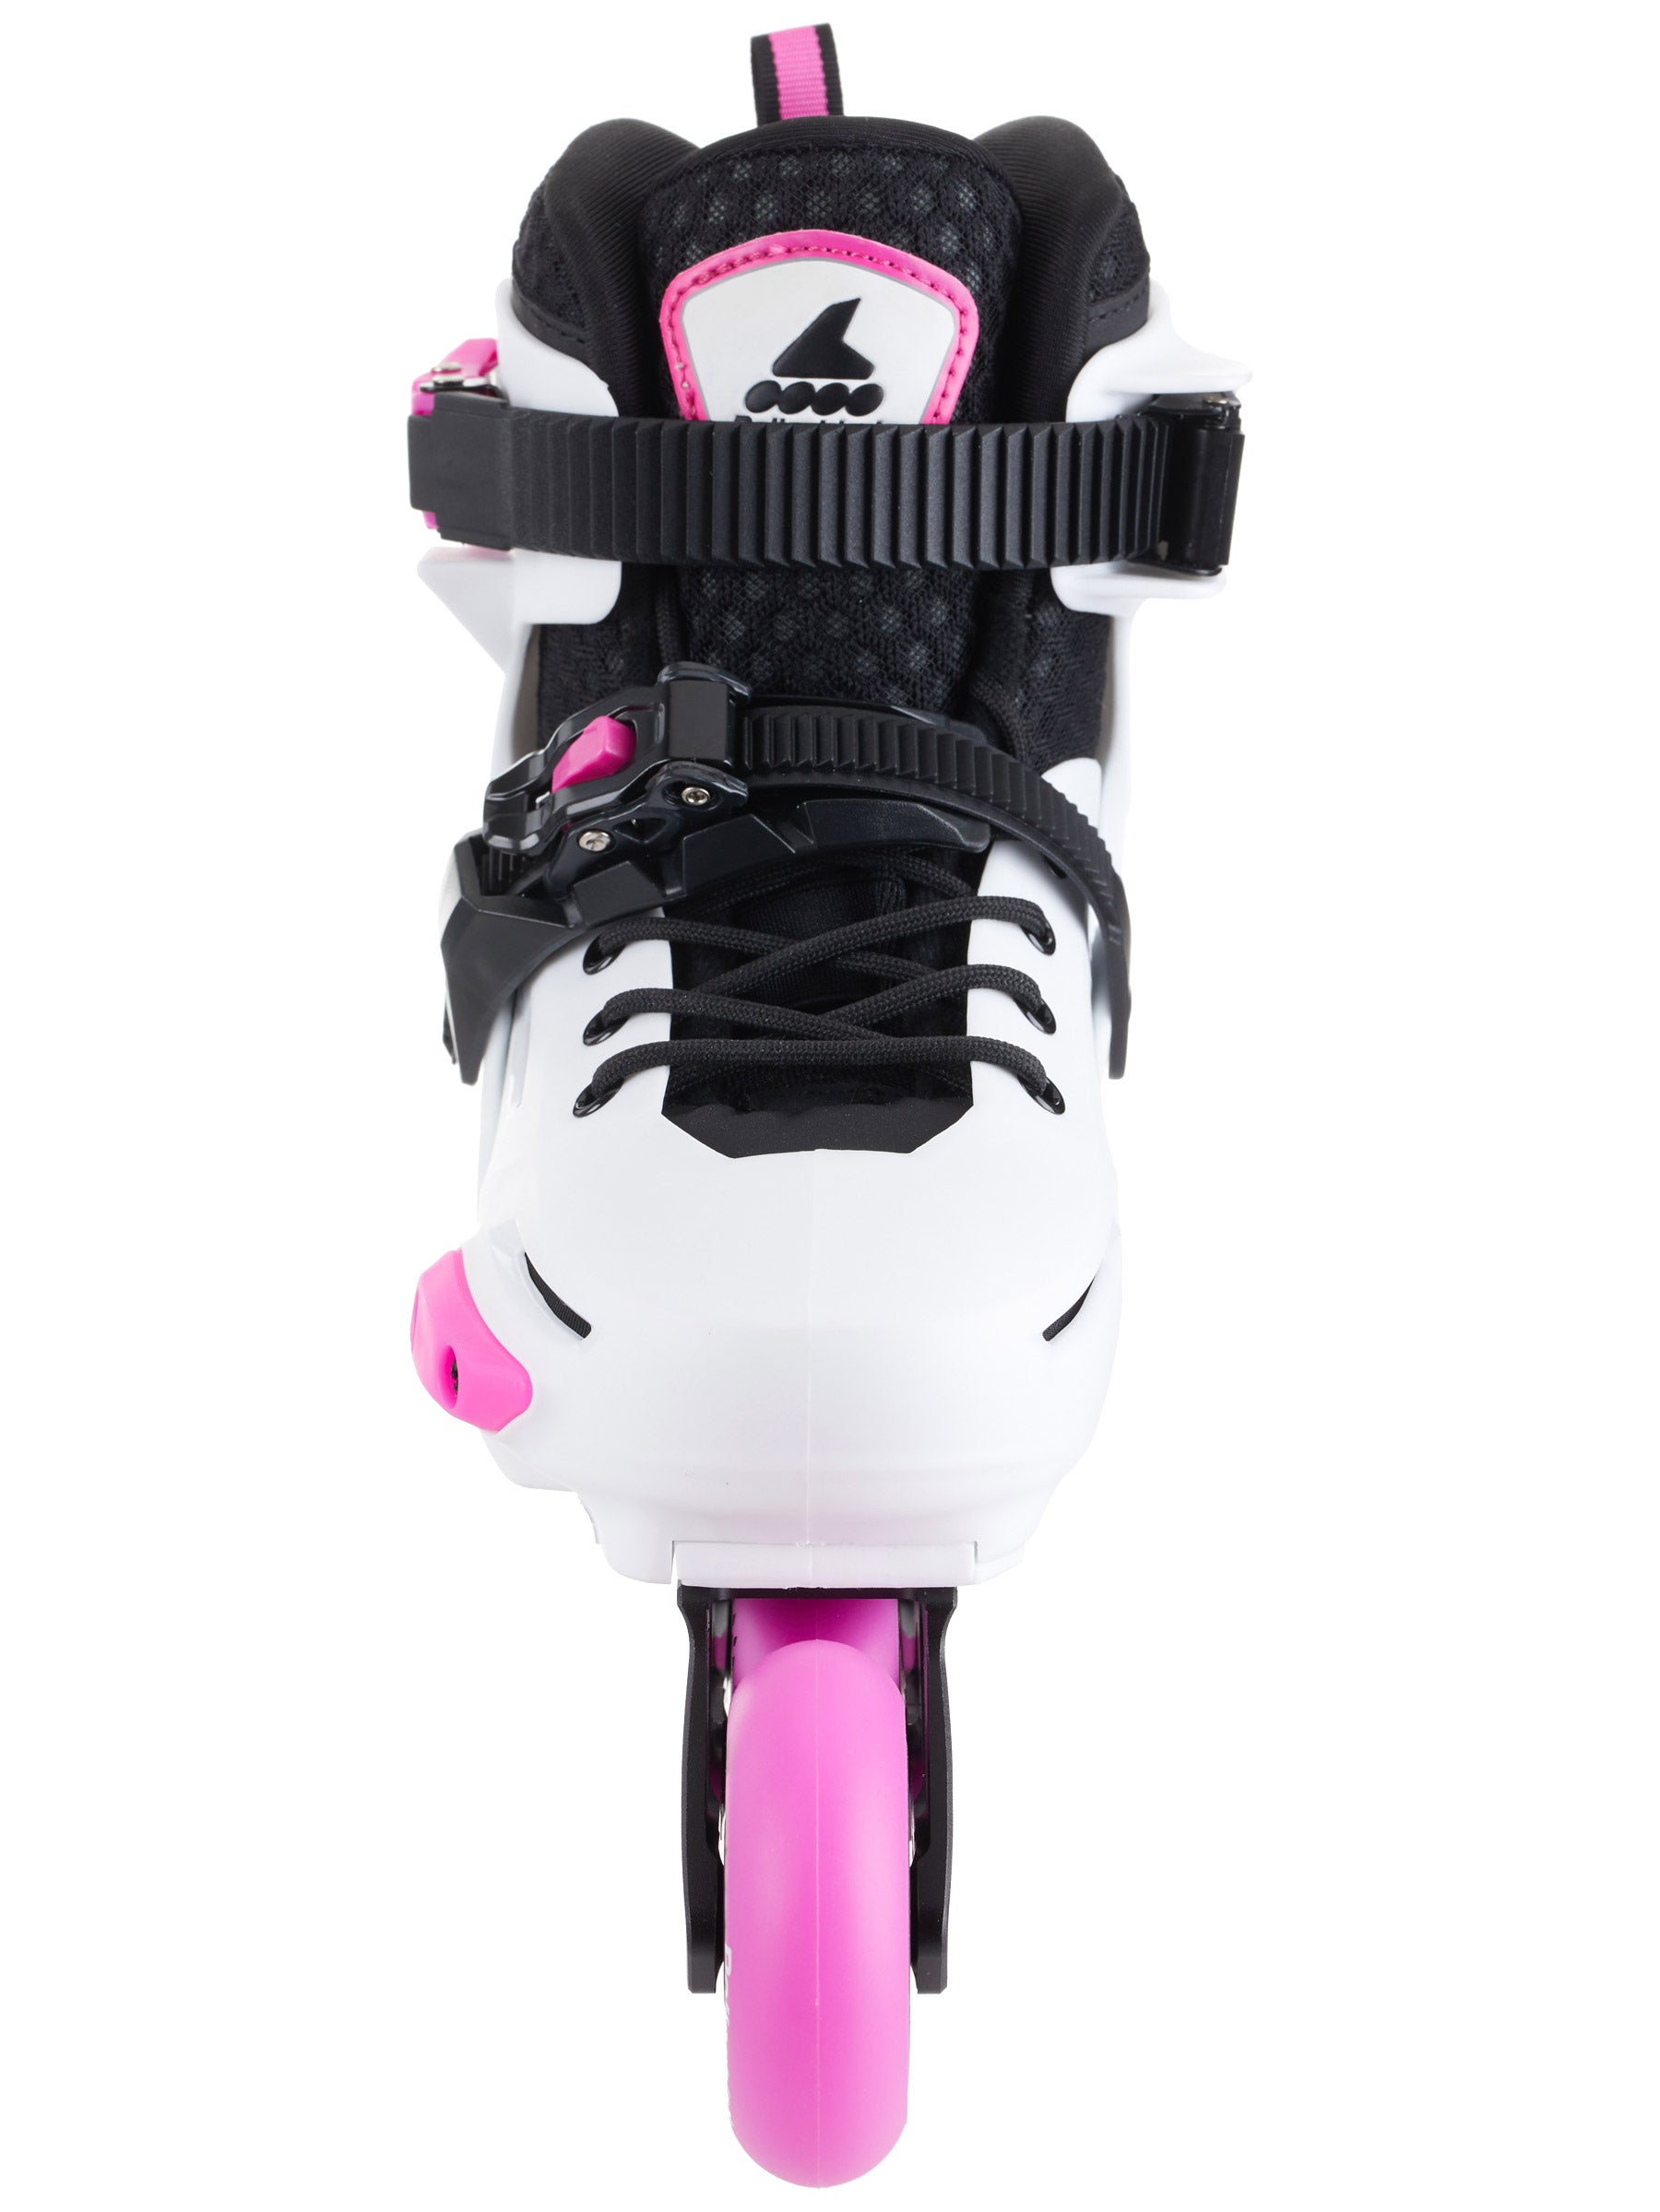 New Details about   Rollerblade Girl's Apex Adjustable Inline Skates 